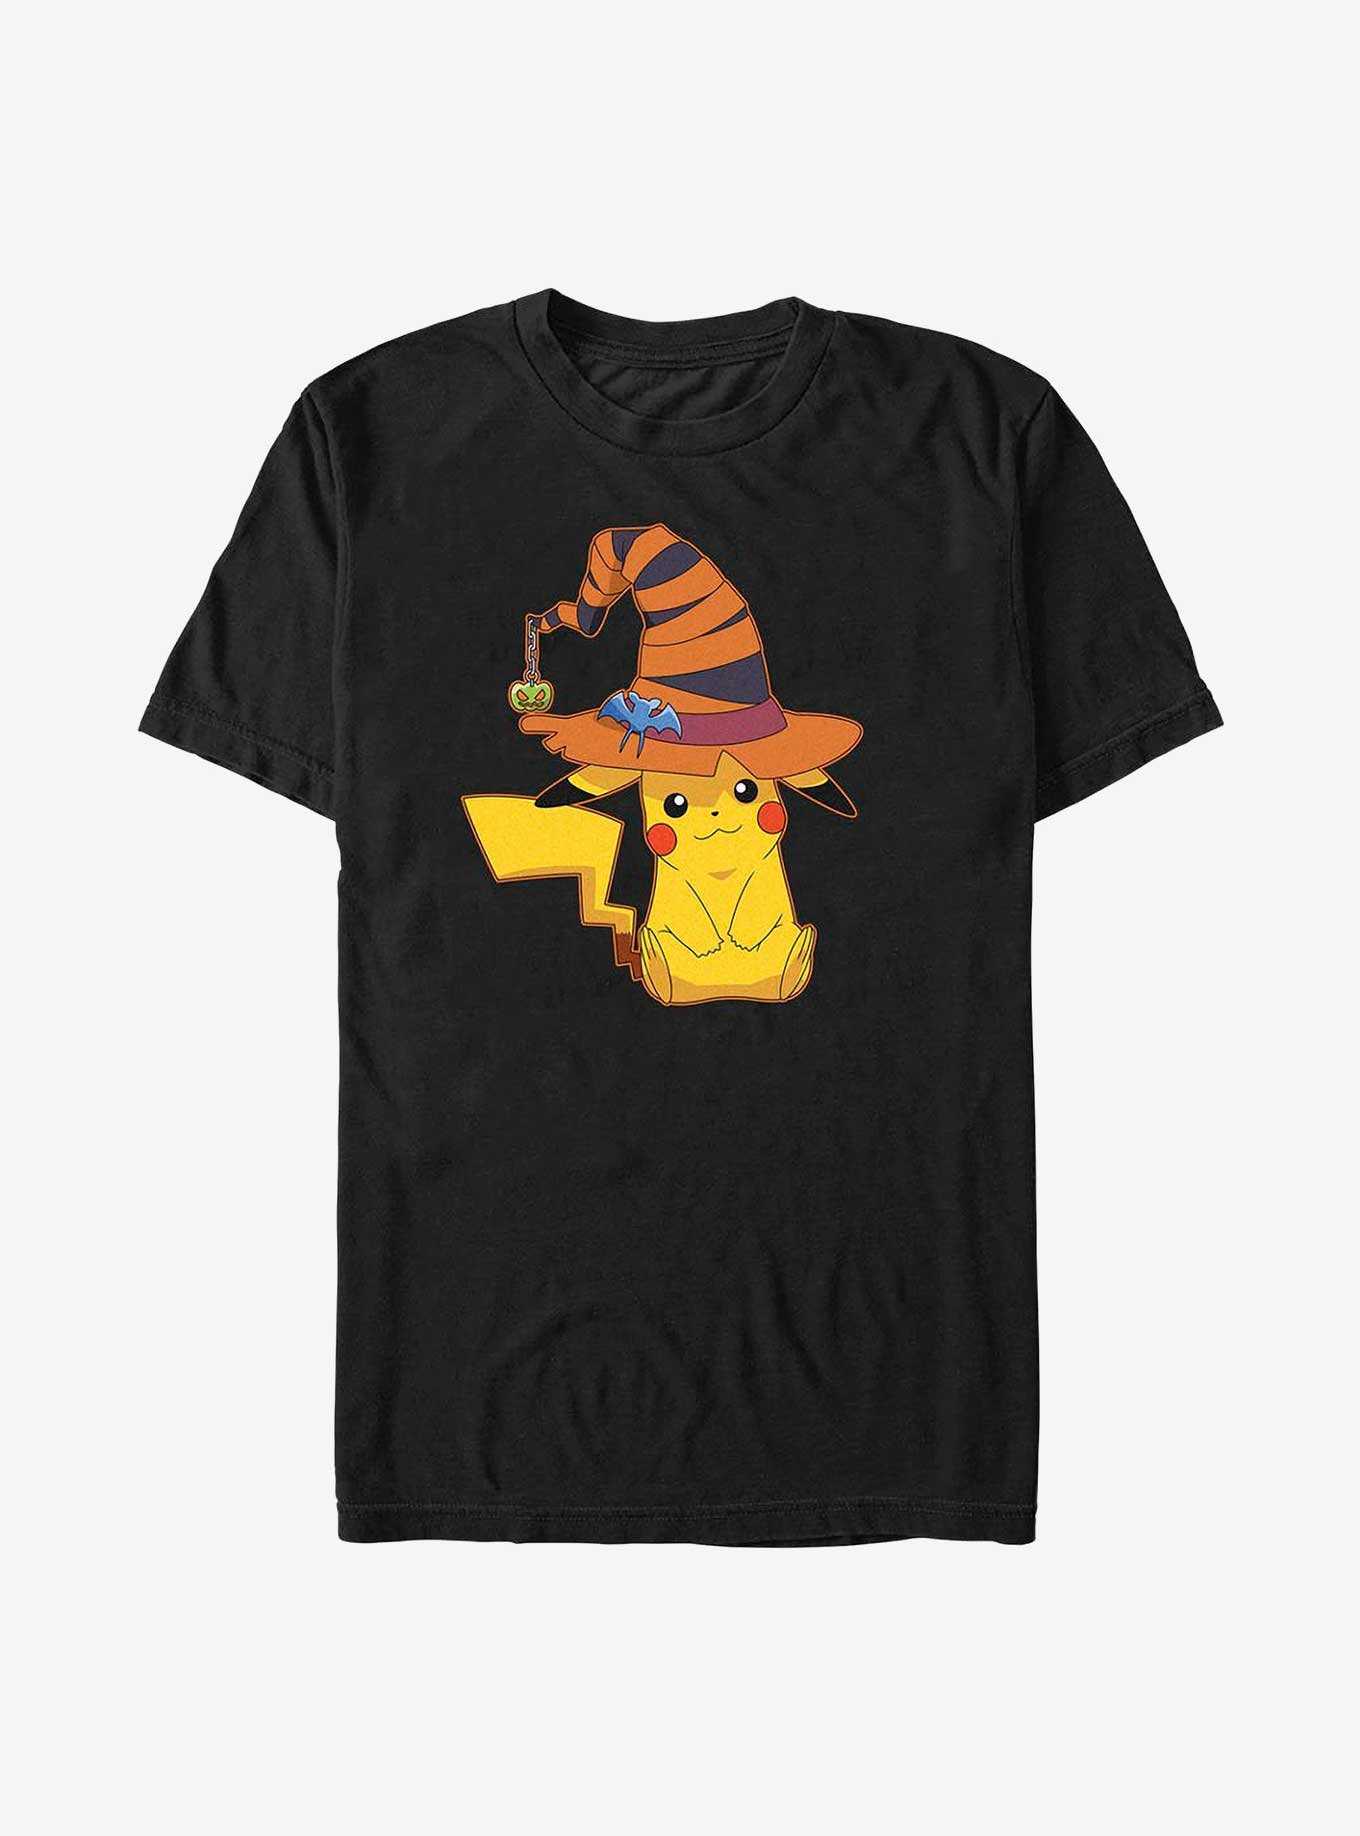 Pokemon Pikachu Witch T-Shirt, , hi-res